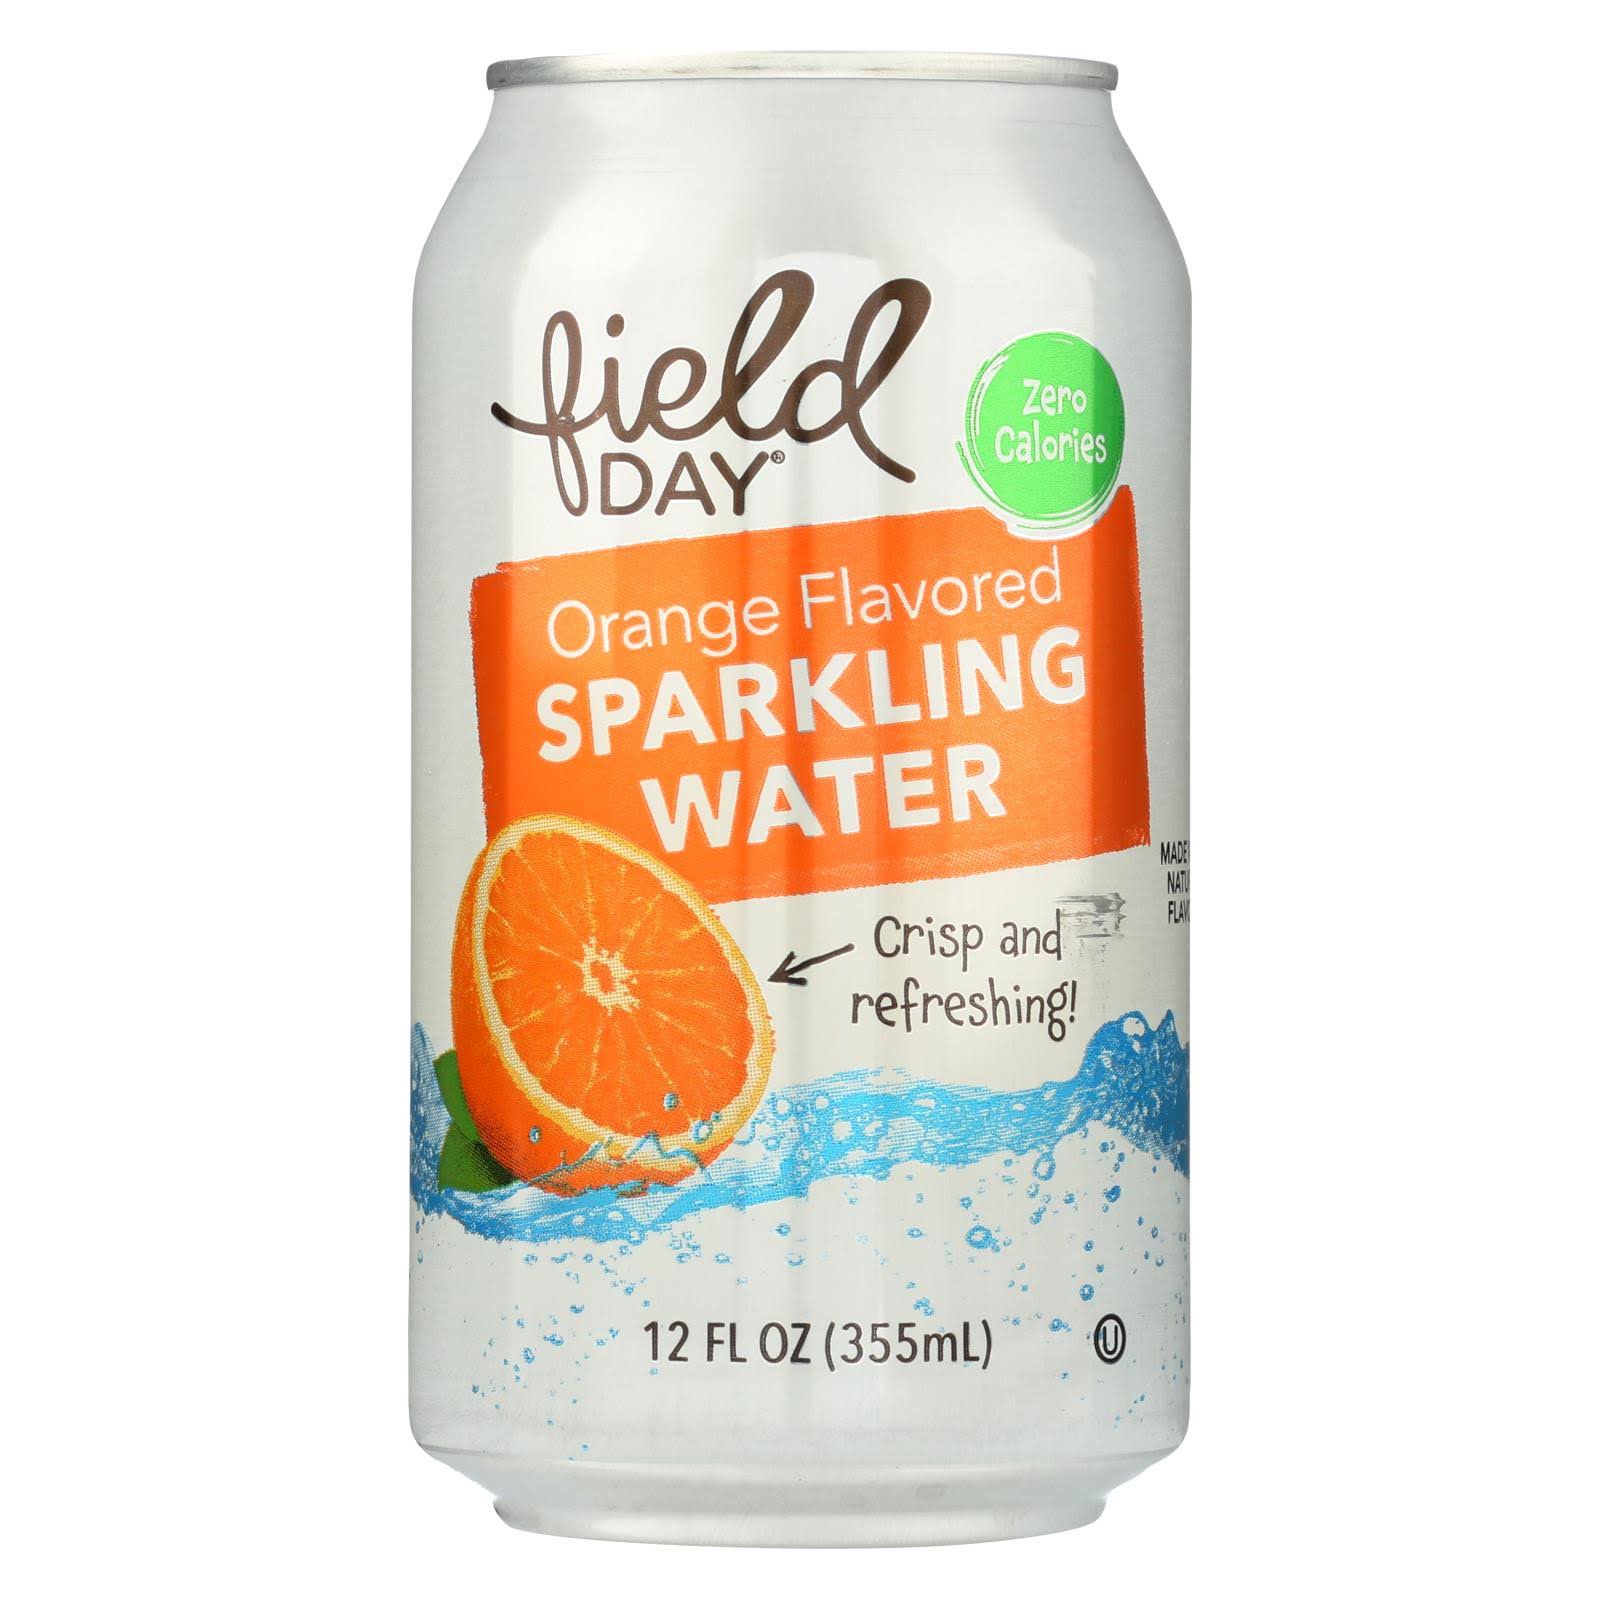 Field Day Orange Flavored Sparkling Water - Sparkling Water - Case of 4 - 12 fl oz